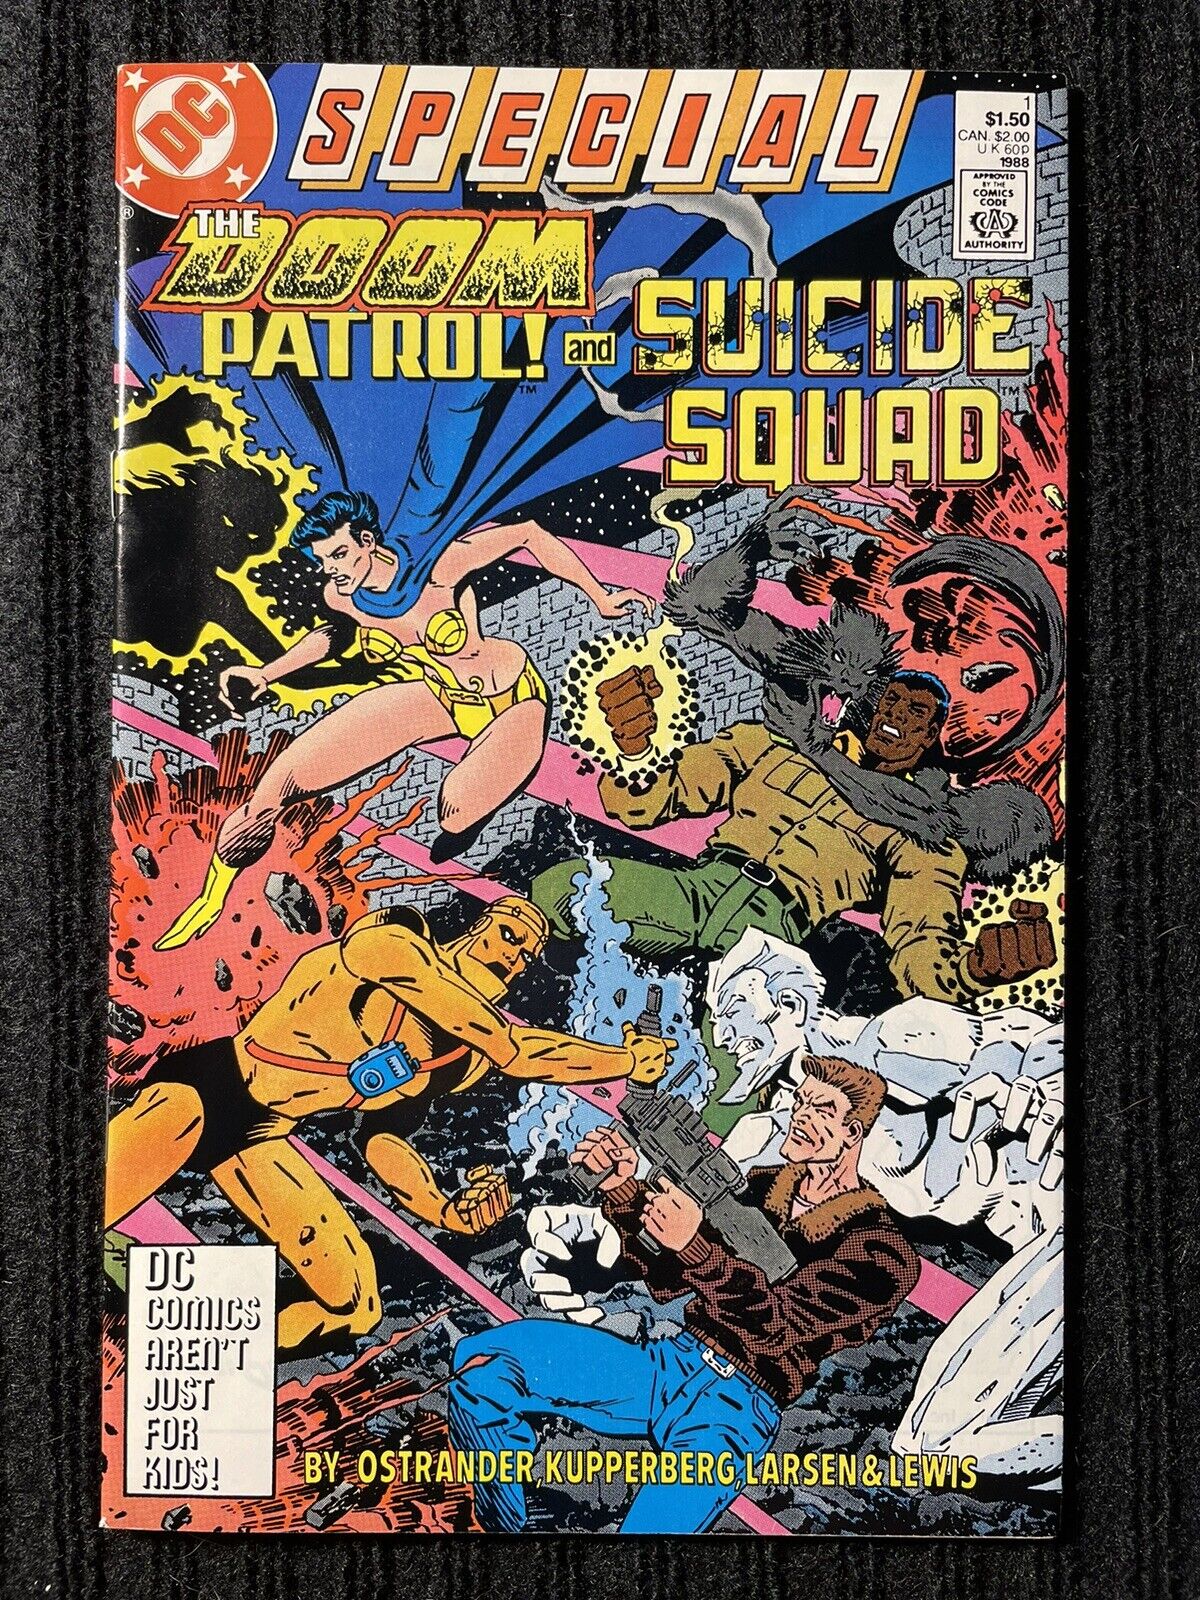 DC Special Doom Patrol & Suicide Squad #1 1988